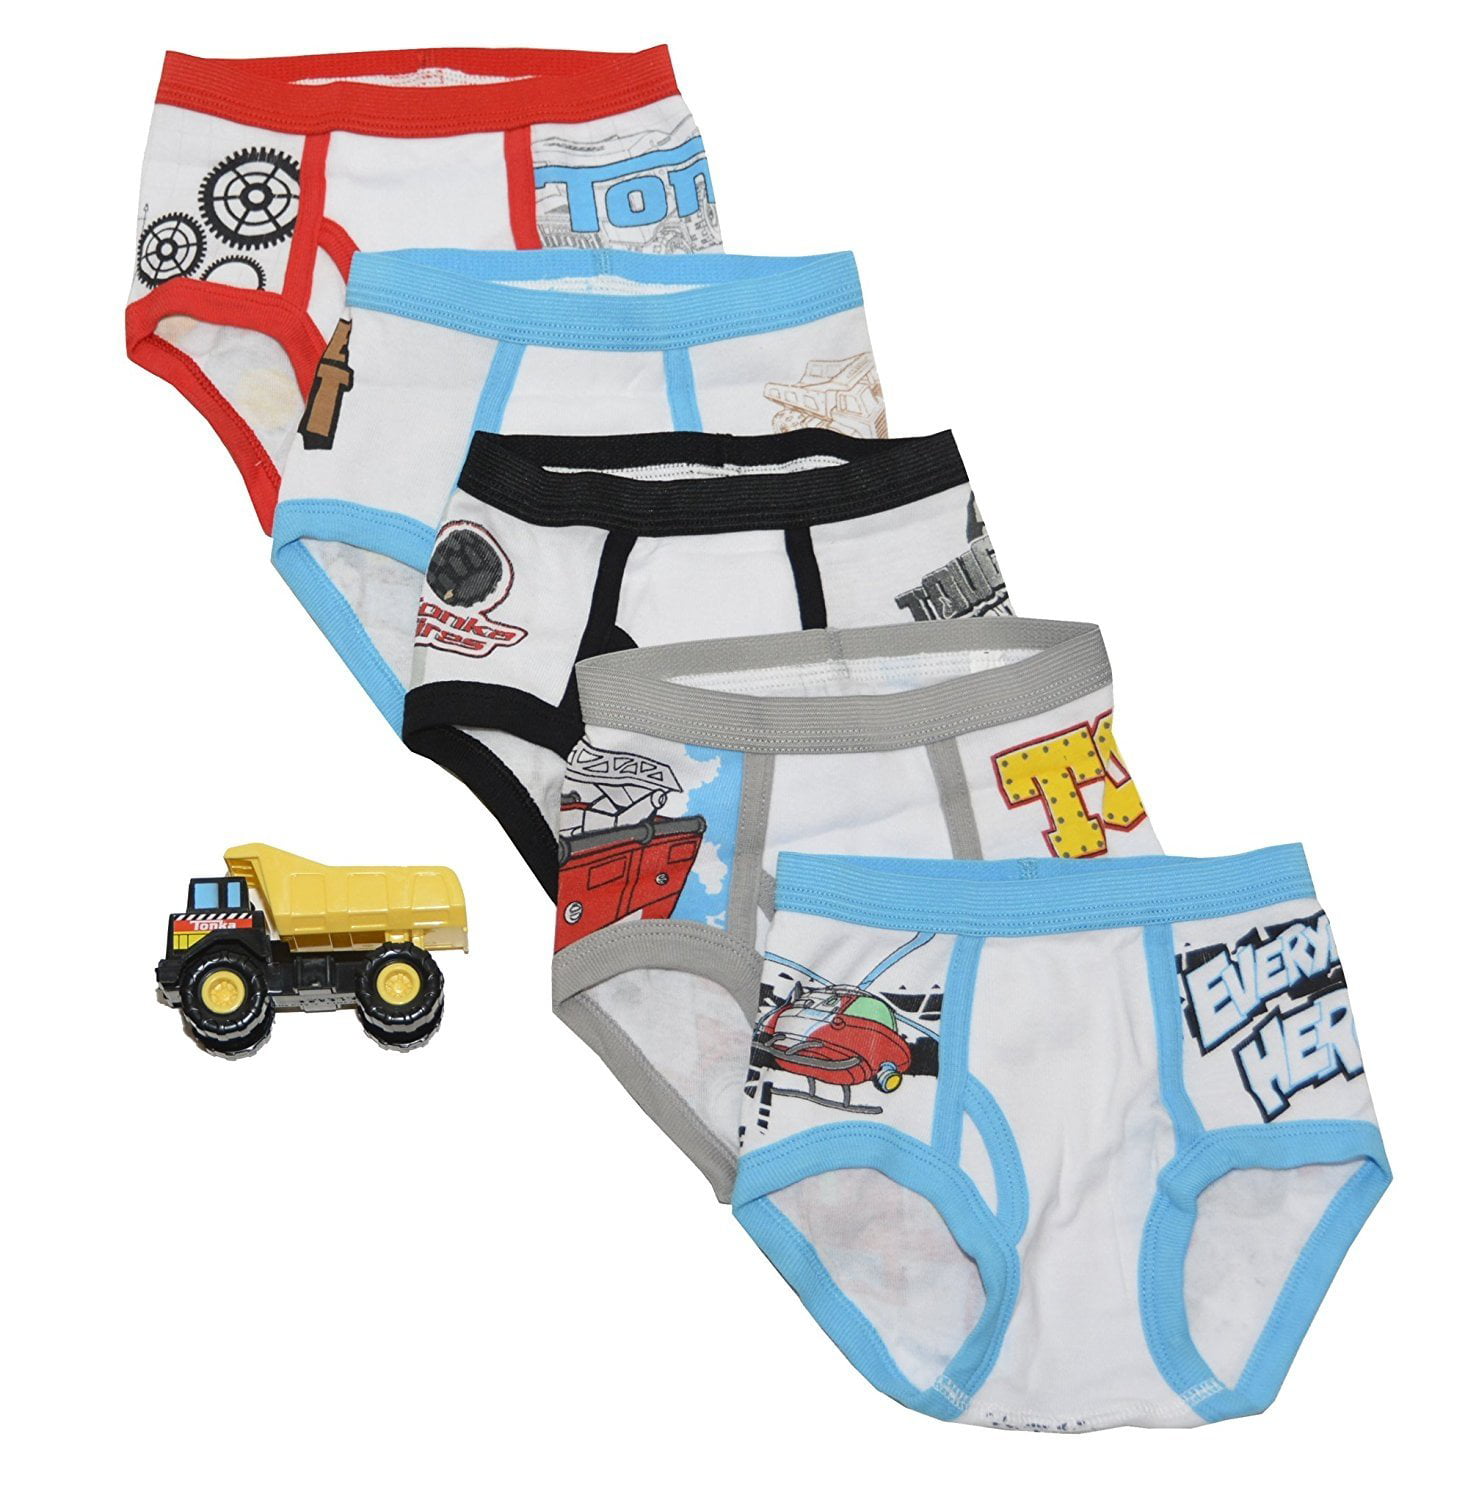 Tonka Trucks Toddler Boys' 5pk Underwear